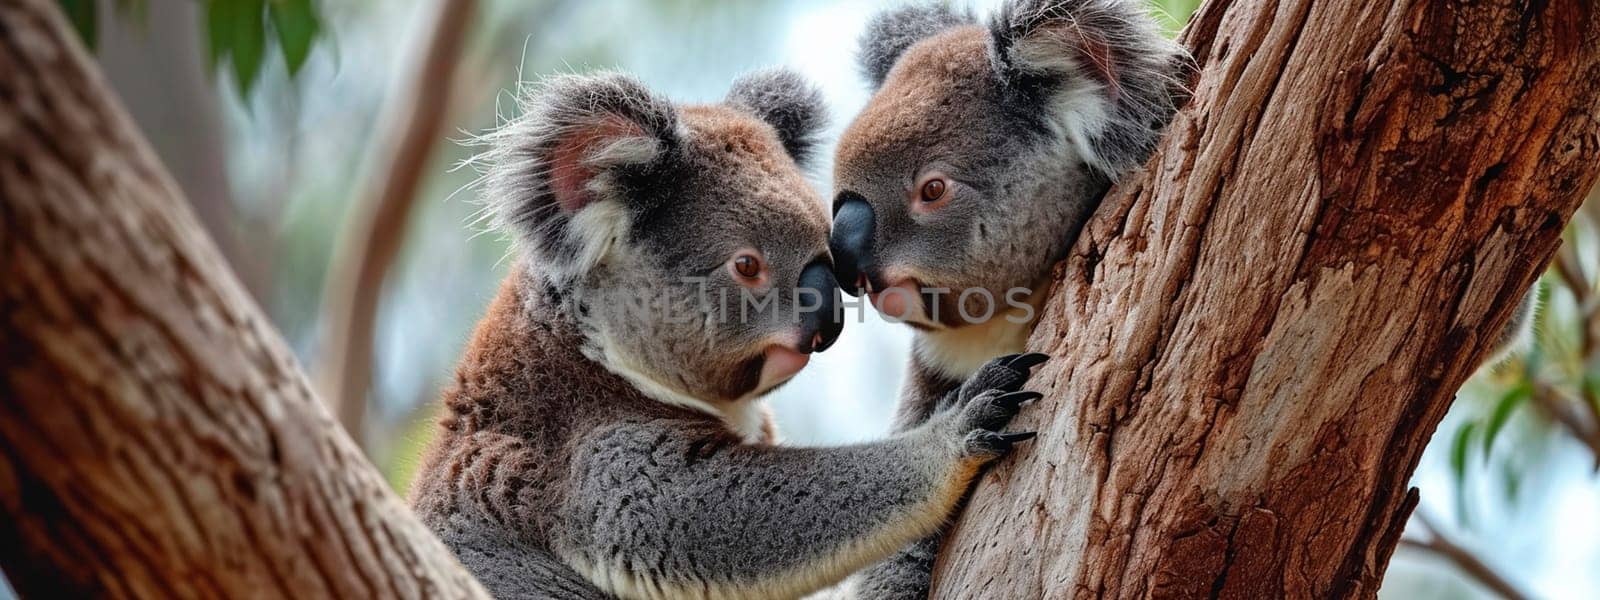 portrait of a koala in the wild. Selective focus. animal.